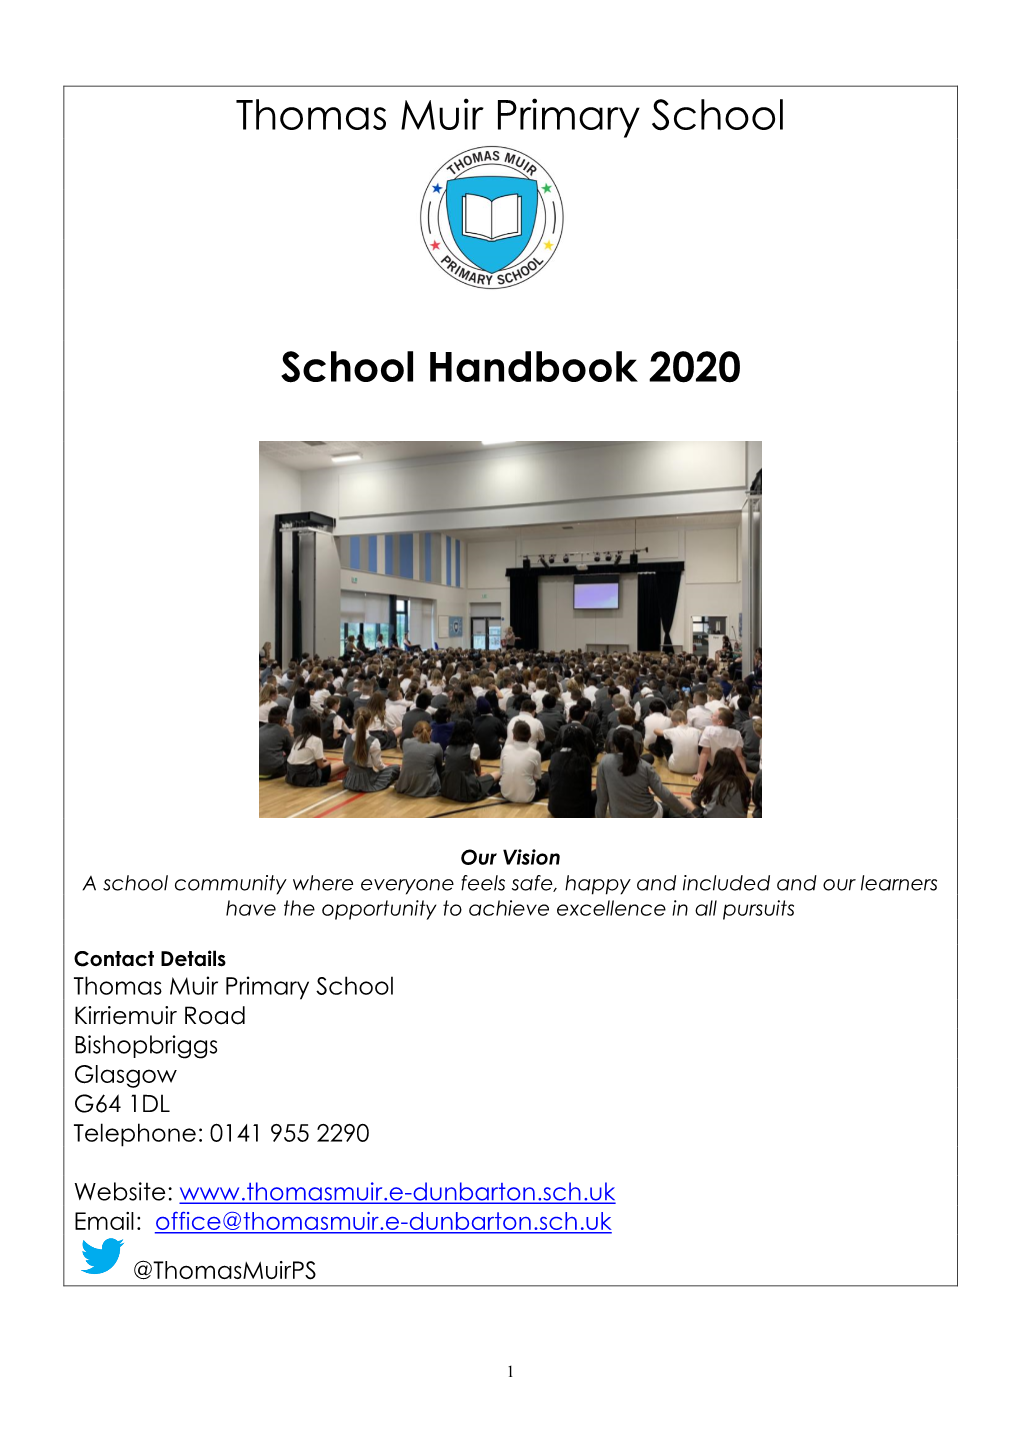 Thomas Muir Primary School School Handbook 2020